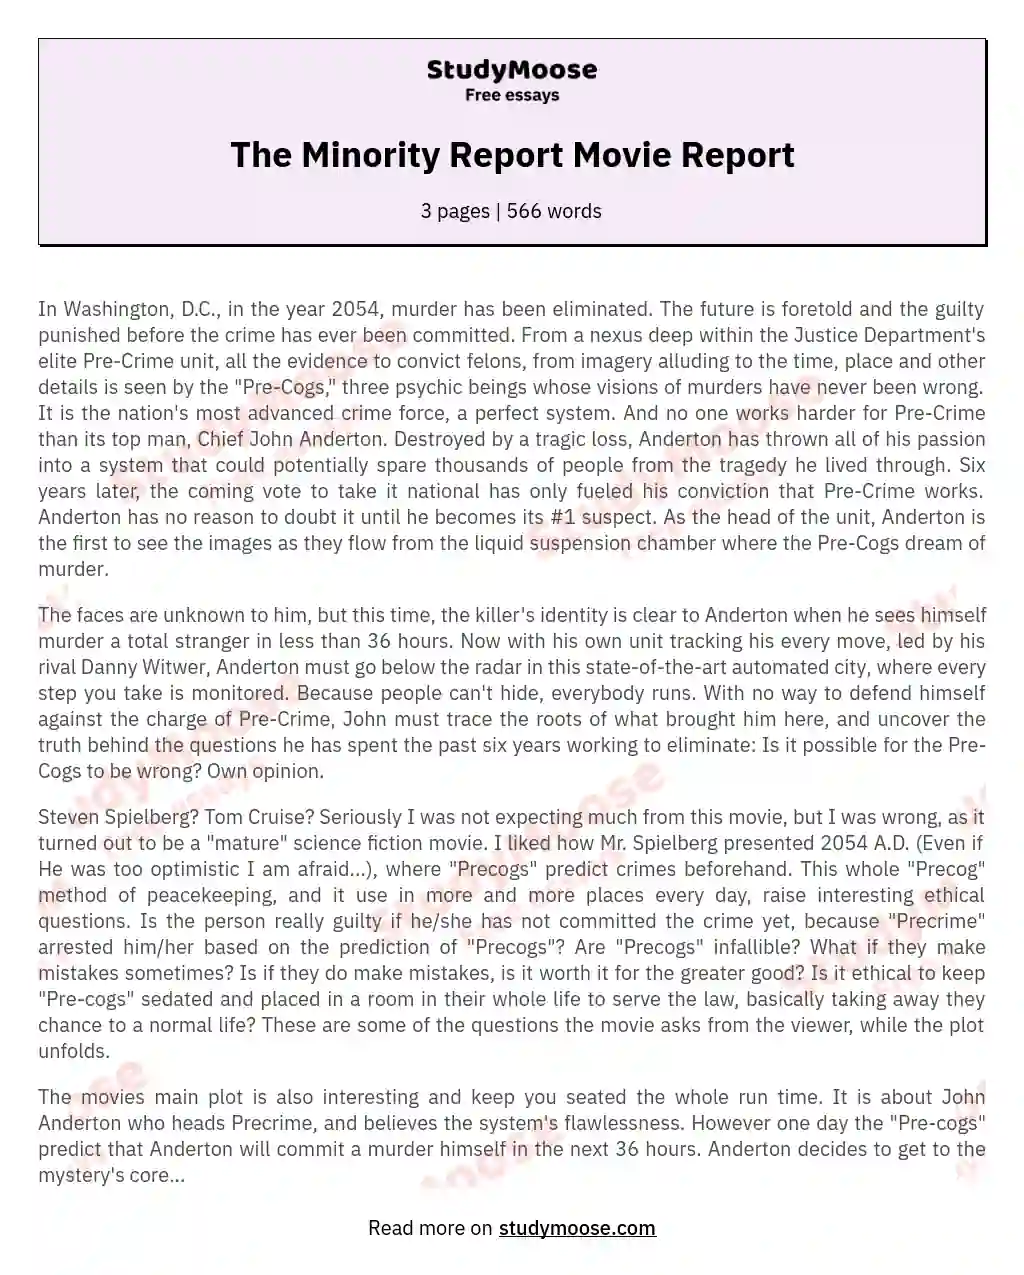 The Minority Report Movie Report essay